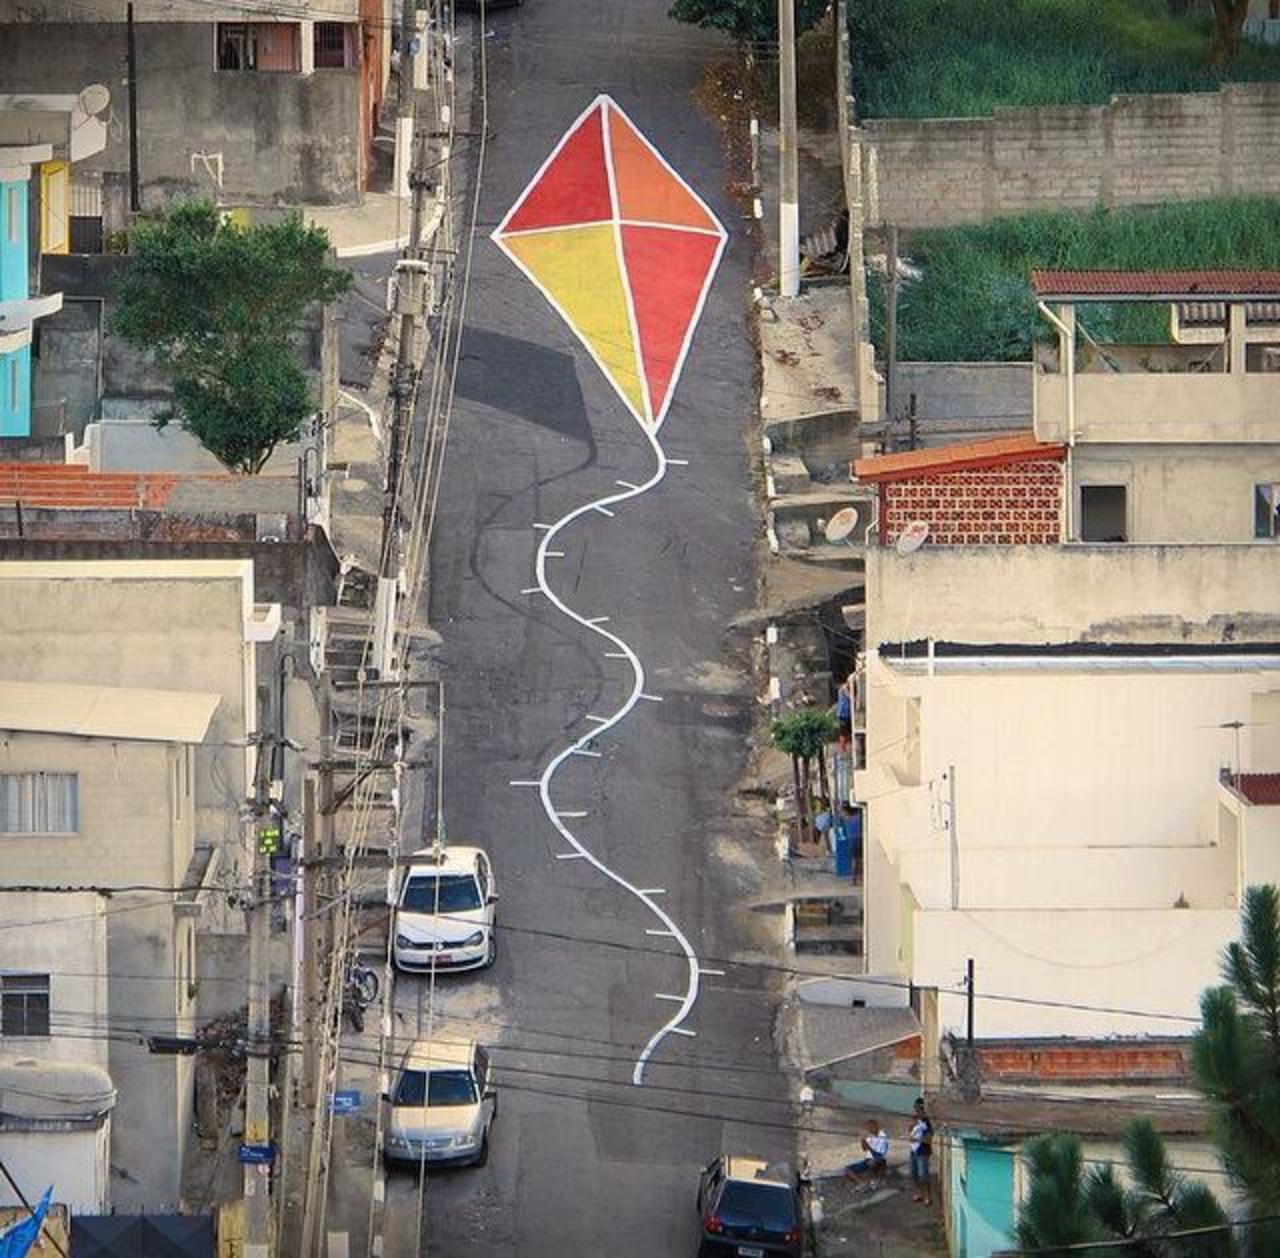 Anamorphic Street Art by Tec Fase in São Paulo 

#art #arte #graffiti #streetart http://t.co/uEG1hEzo8p